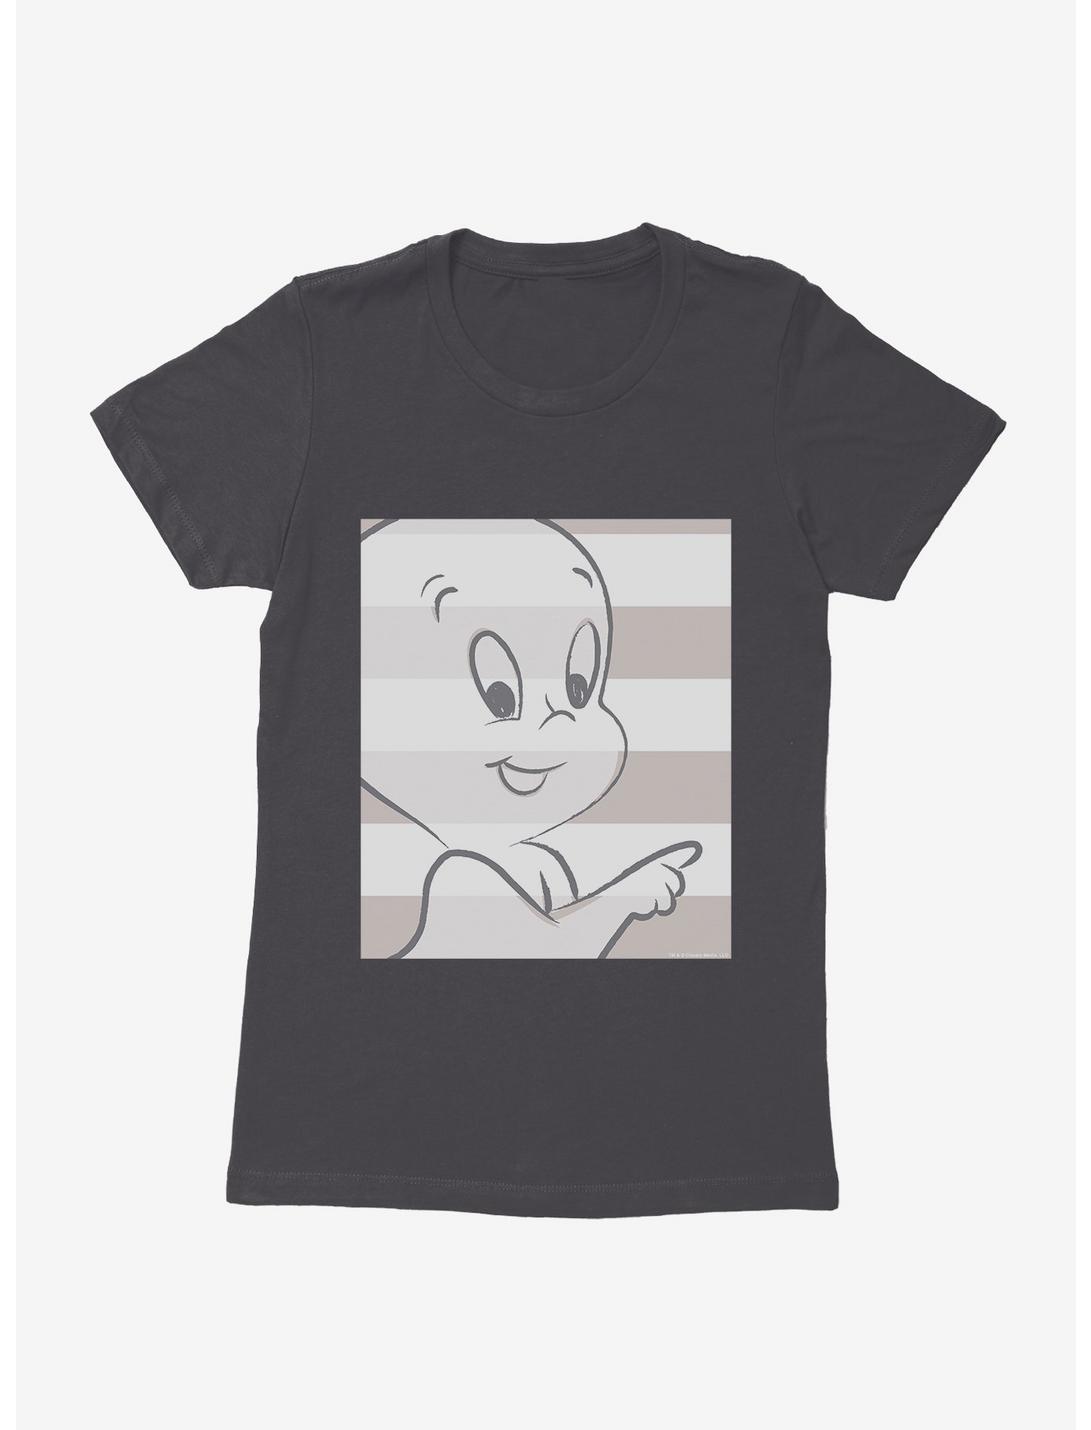 Casper The Friendly Ghost Striped Womens T-Shirt, HEAVY METAL, hi-res